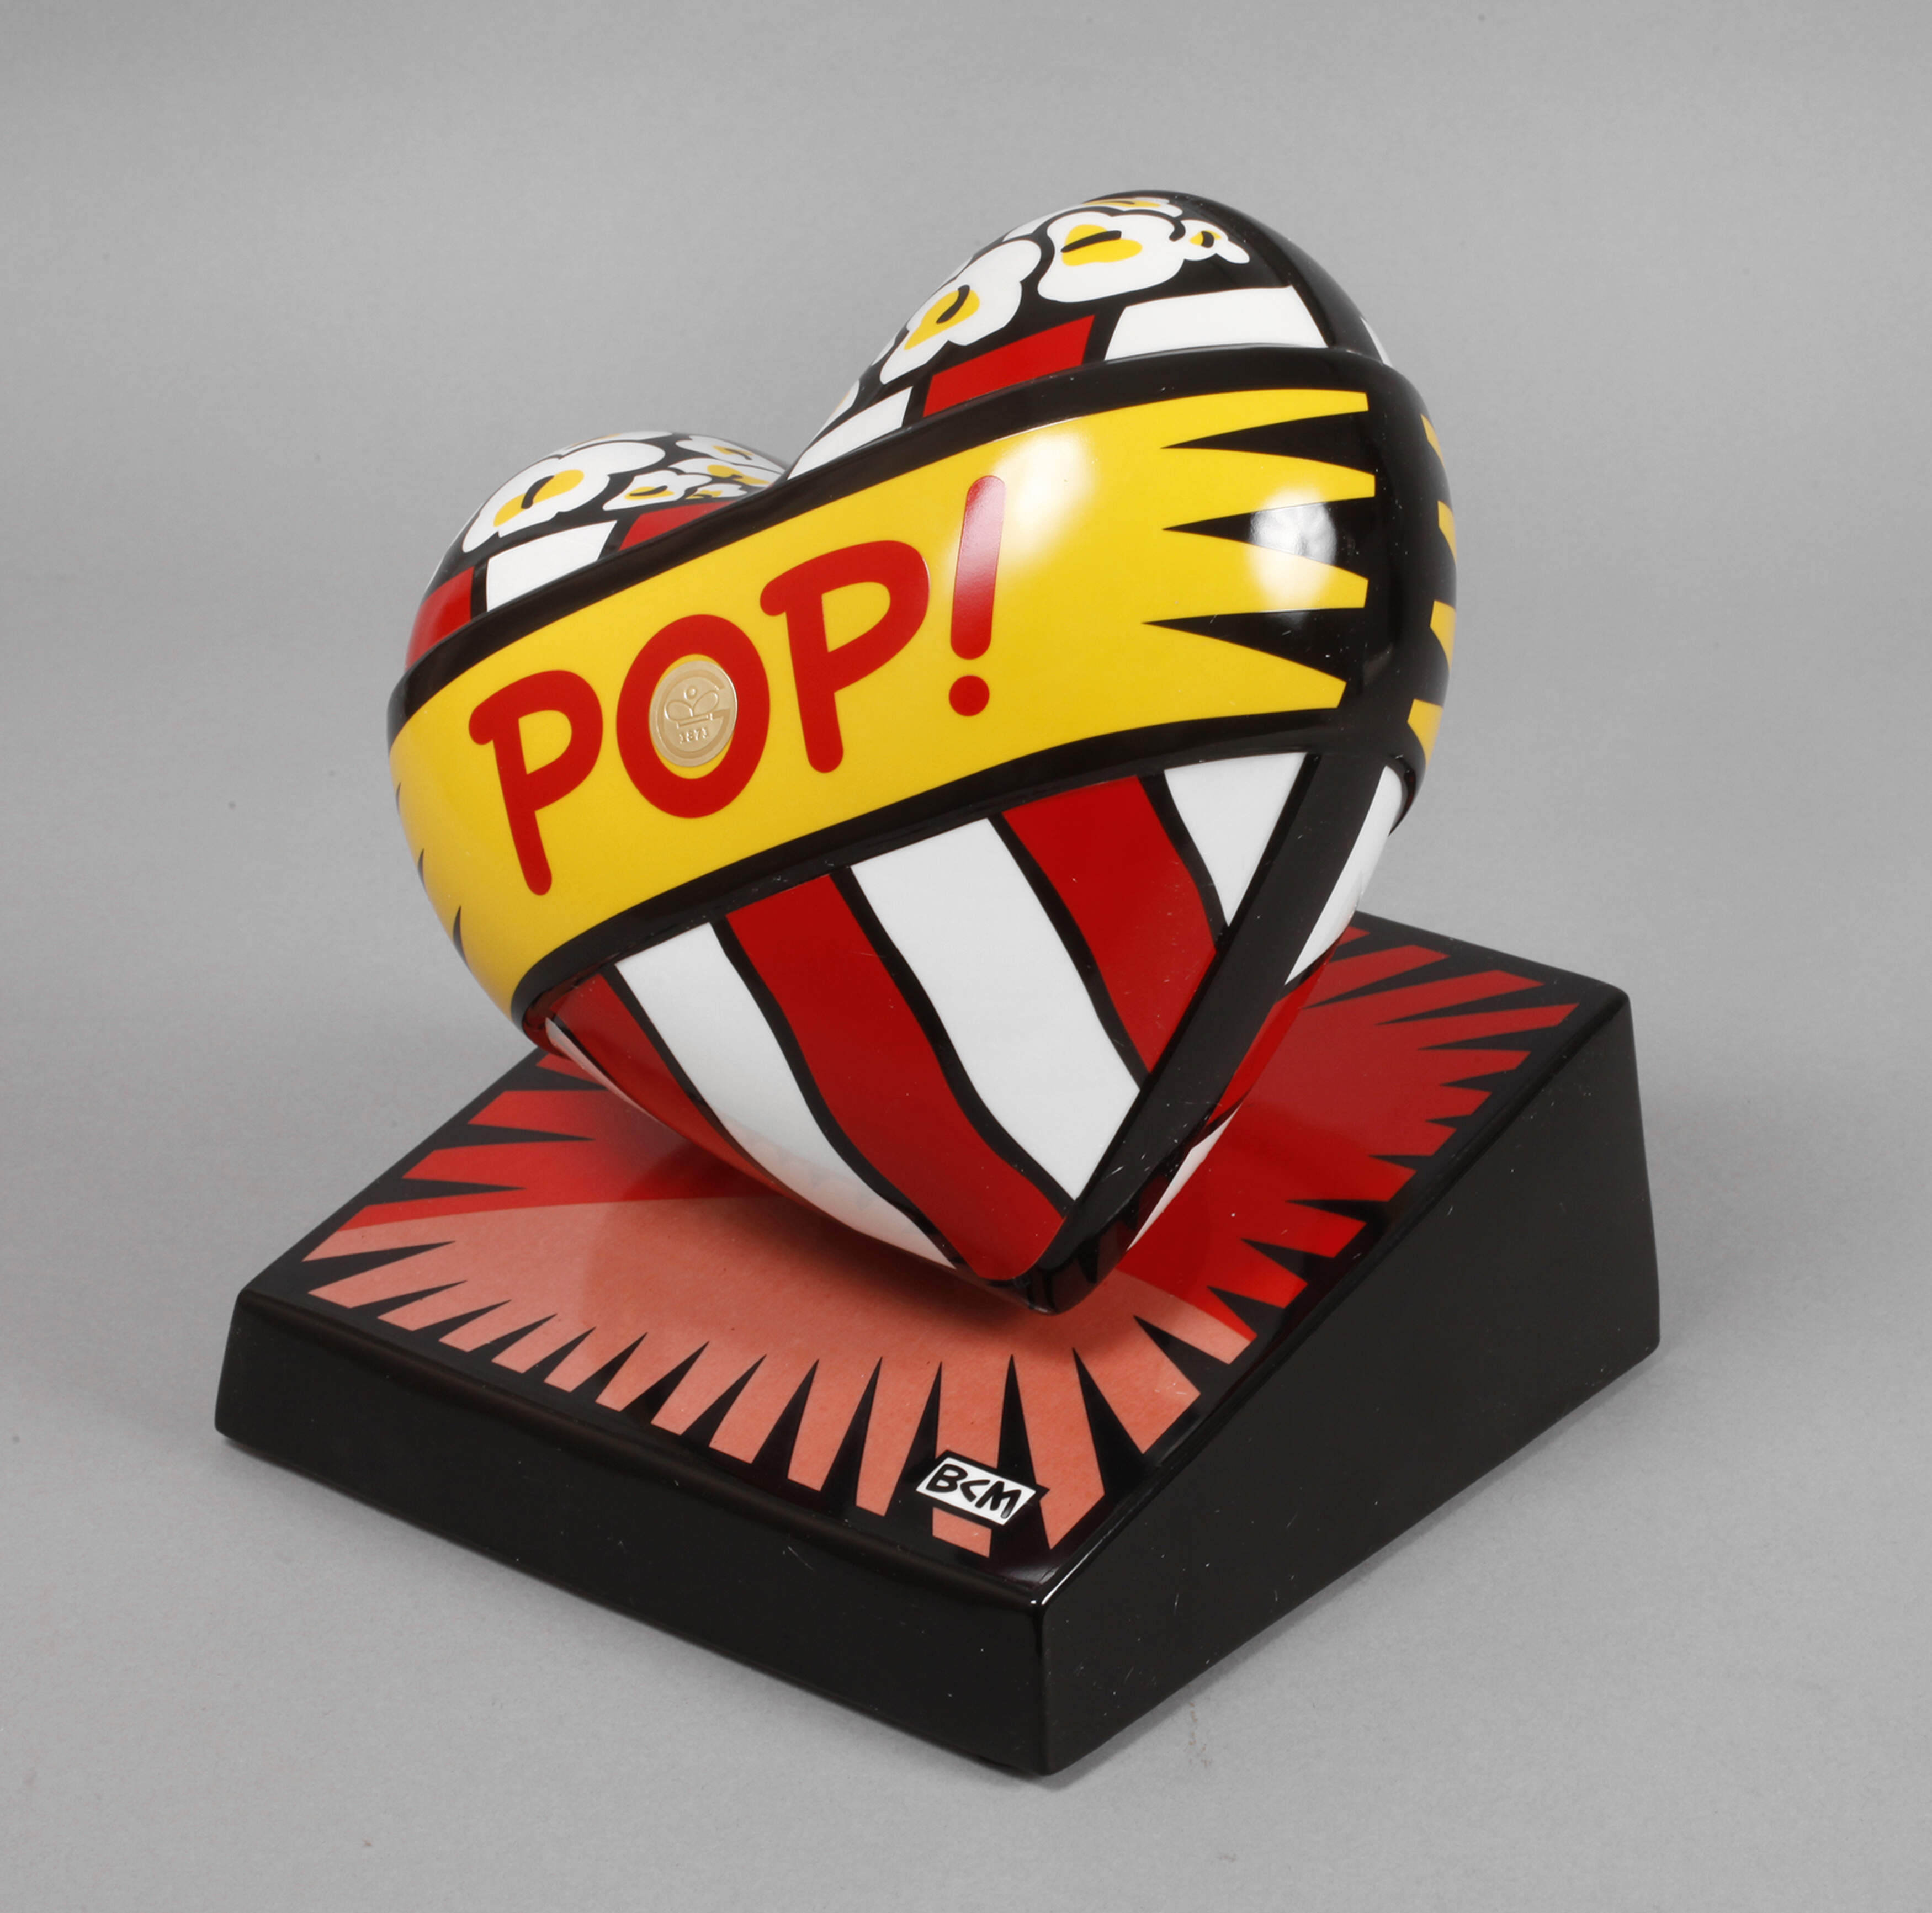 Goebel Porzellanobjekt "Love Pop!"